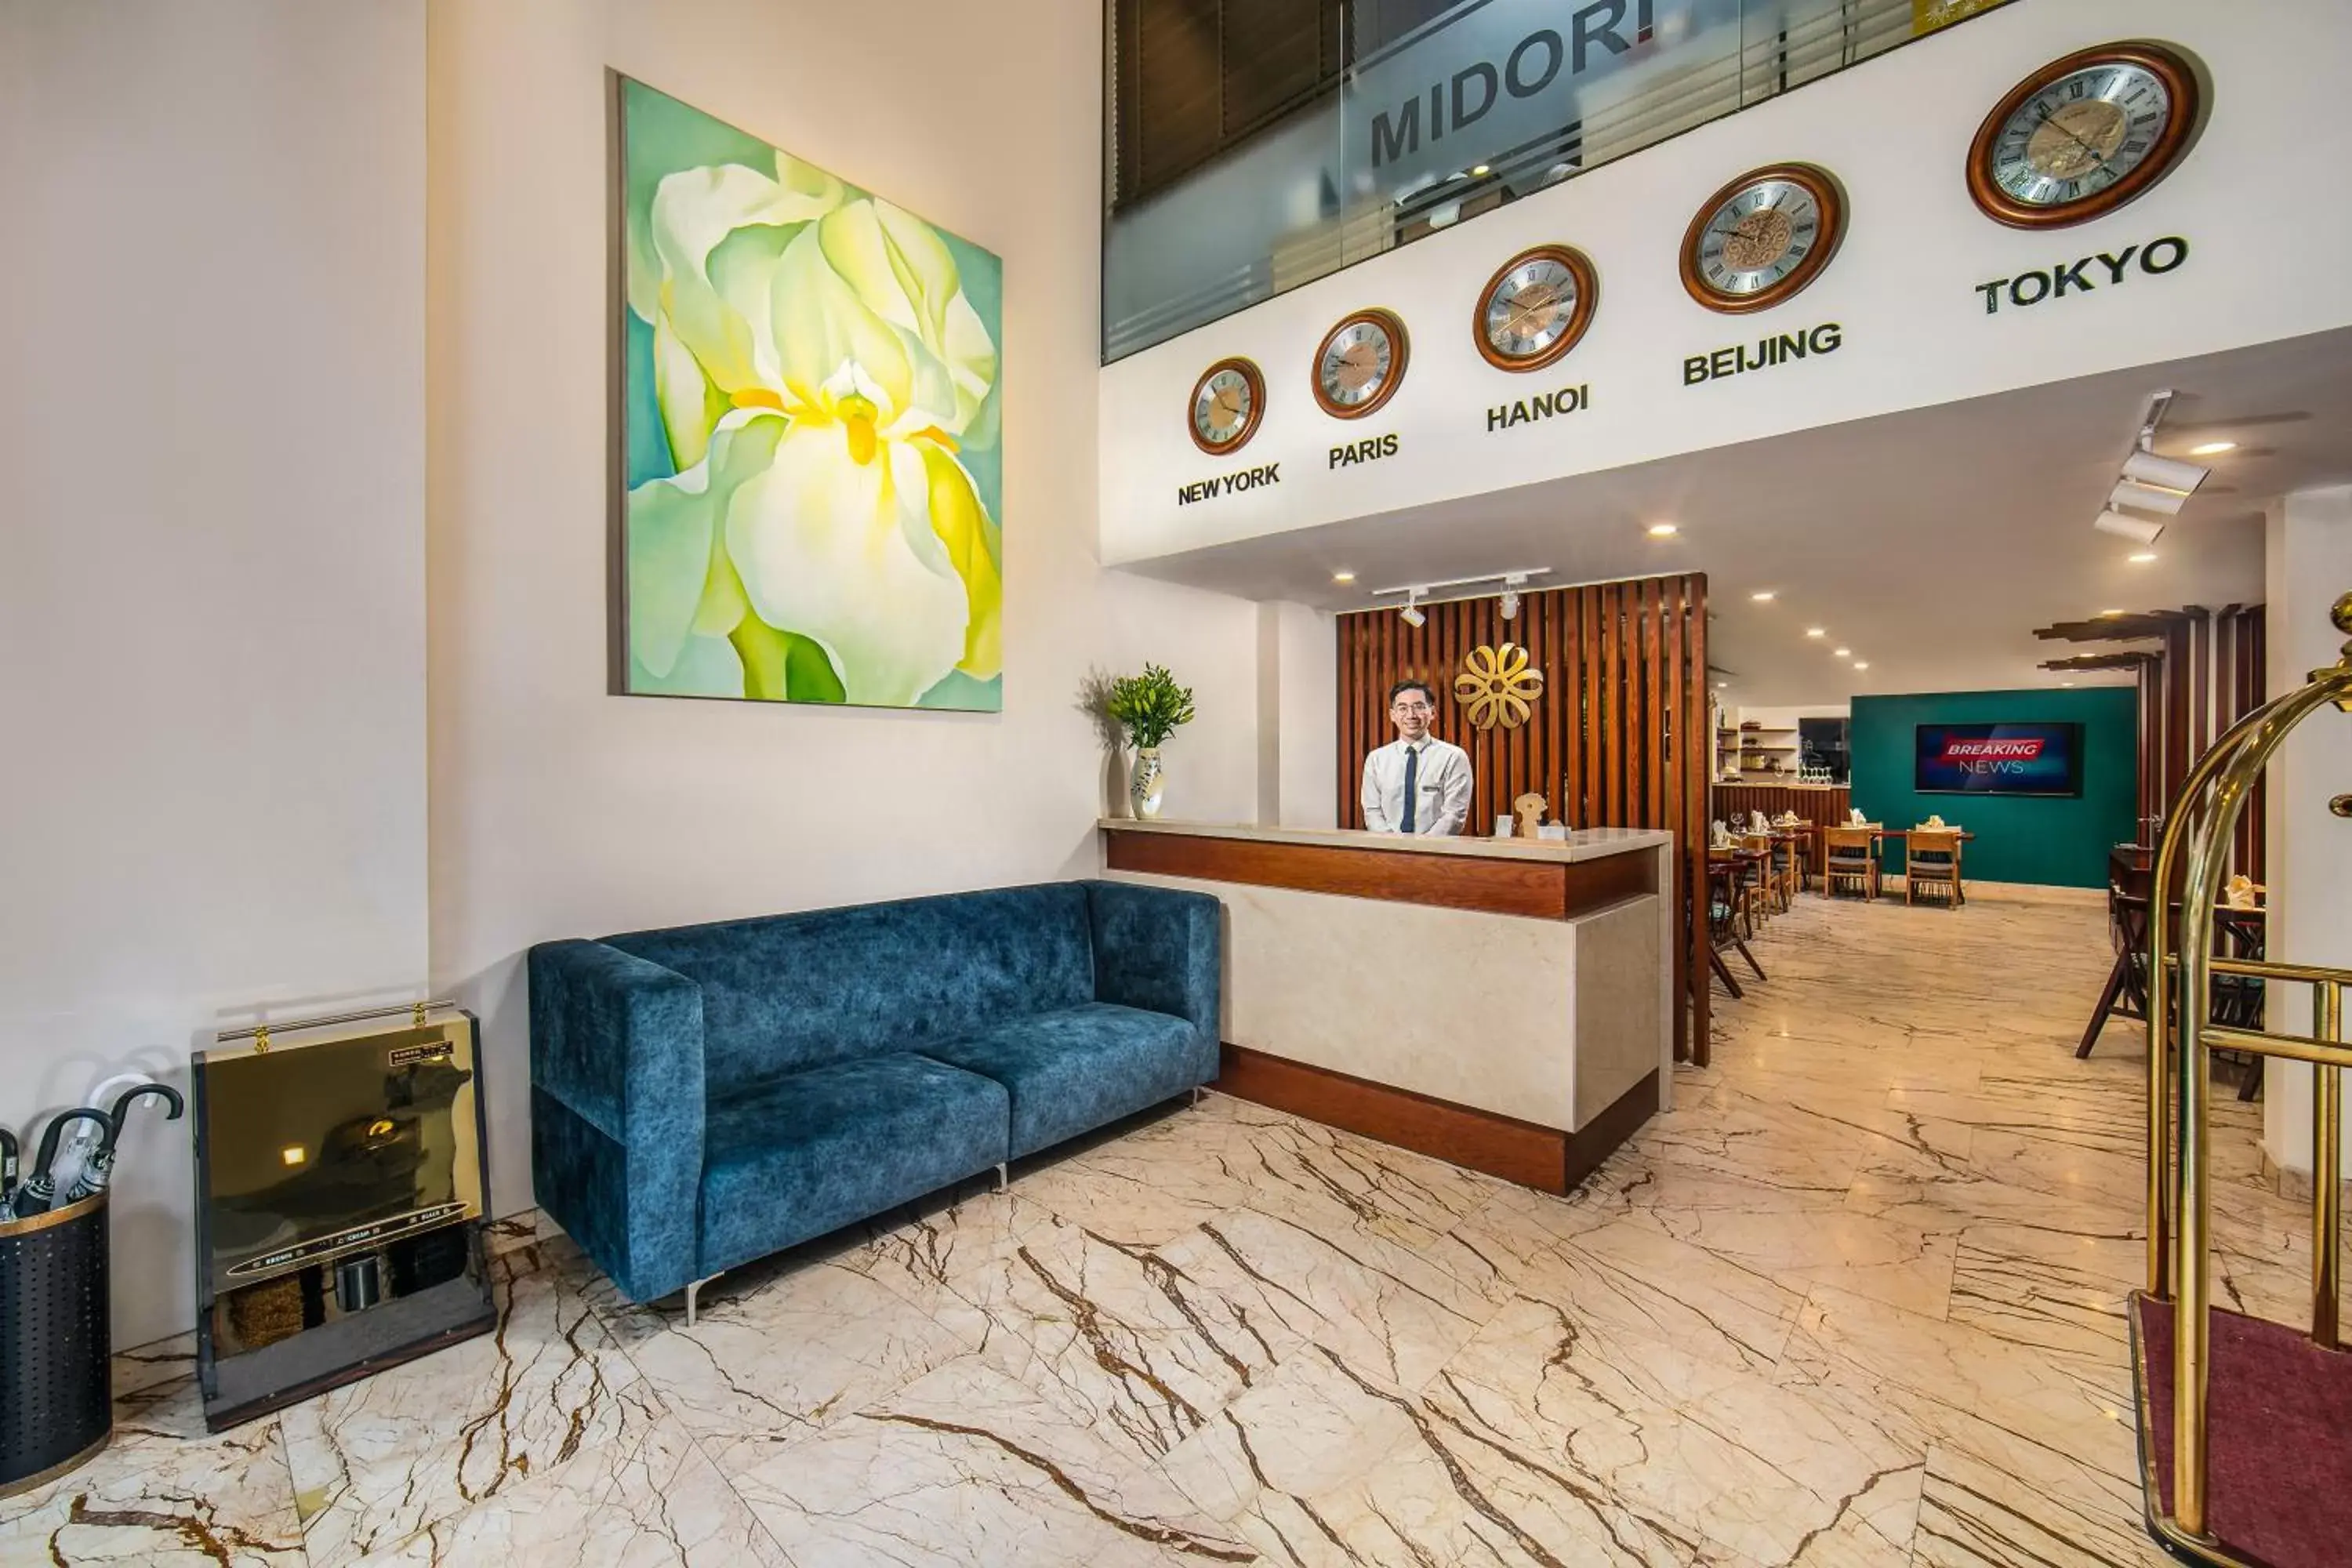 Lobby or reception in Midori Boutique Hotel